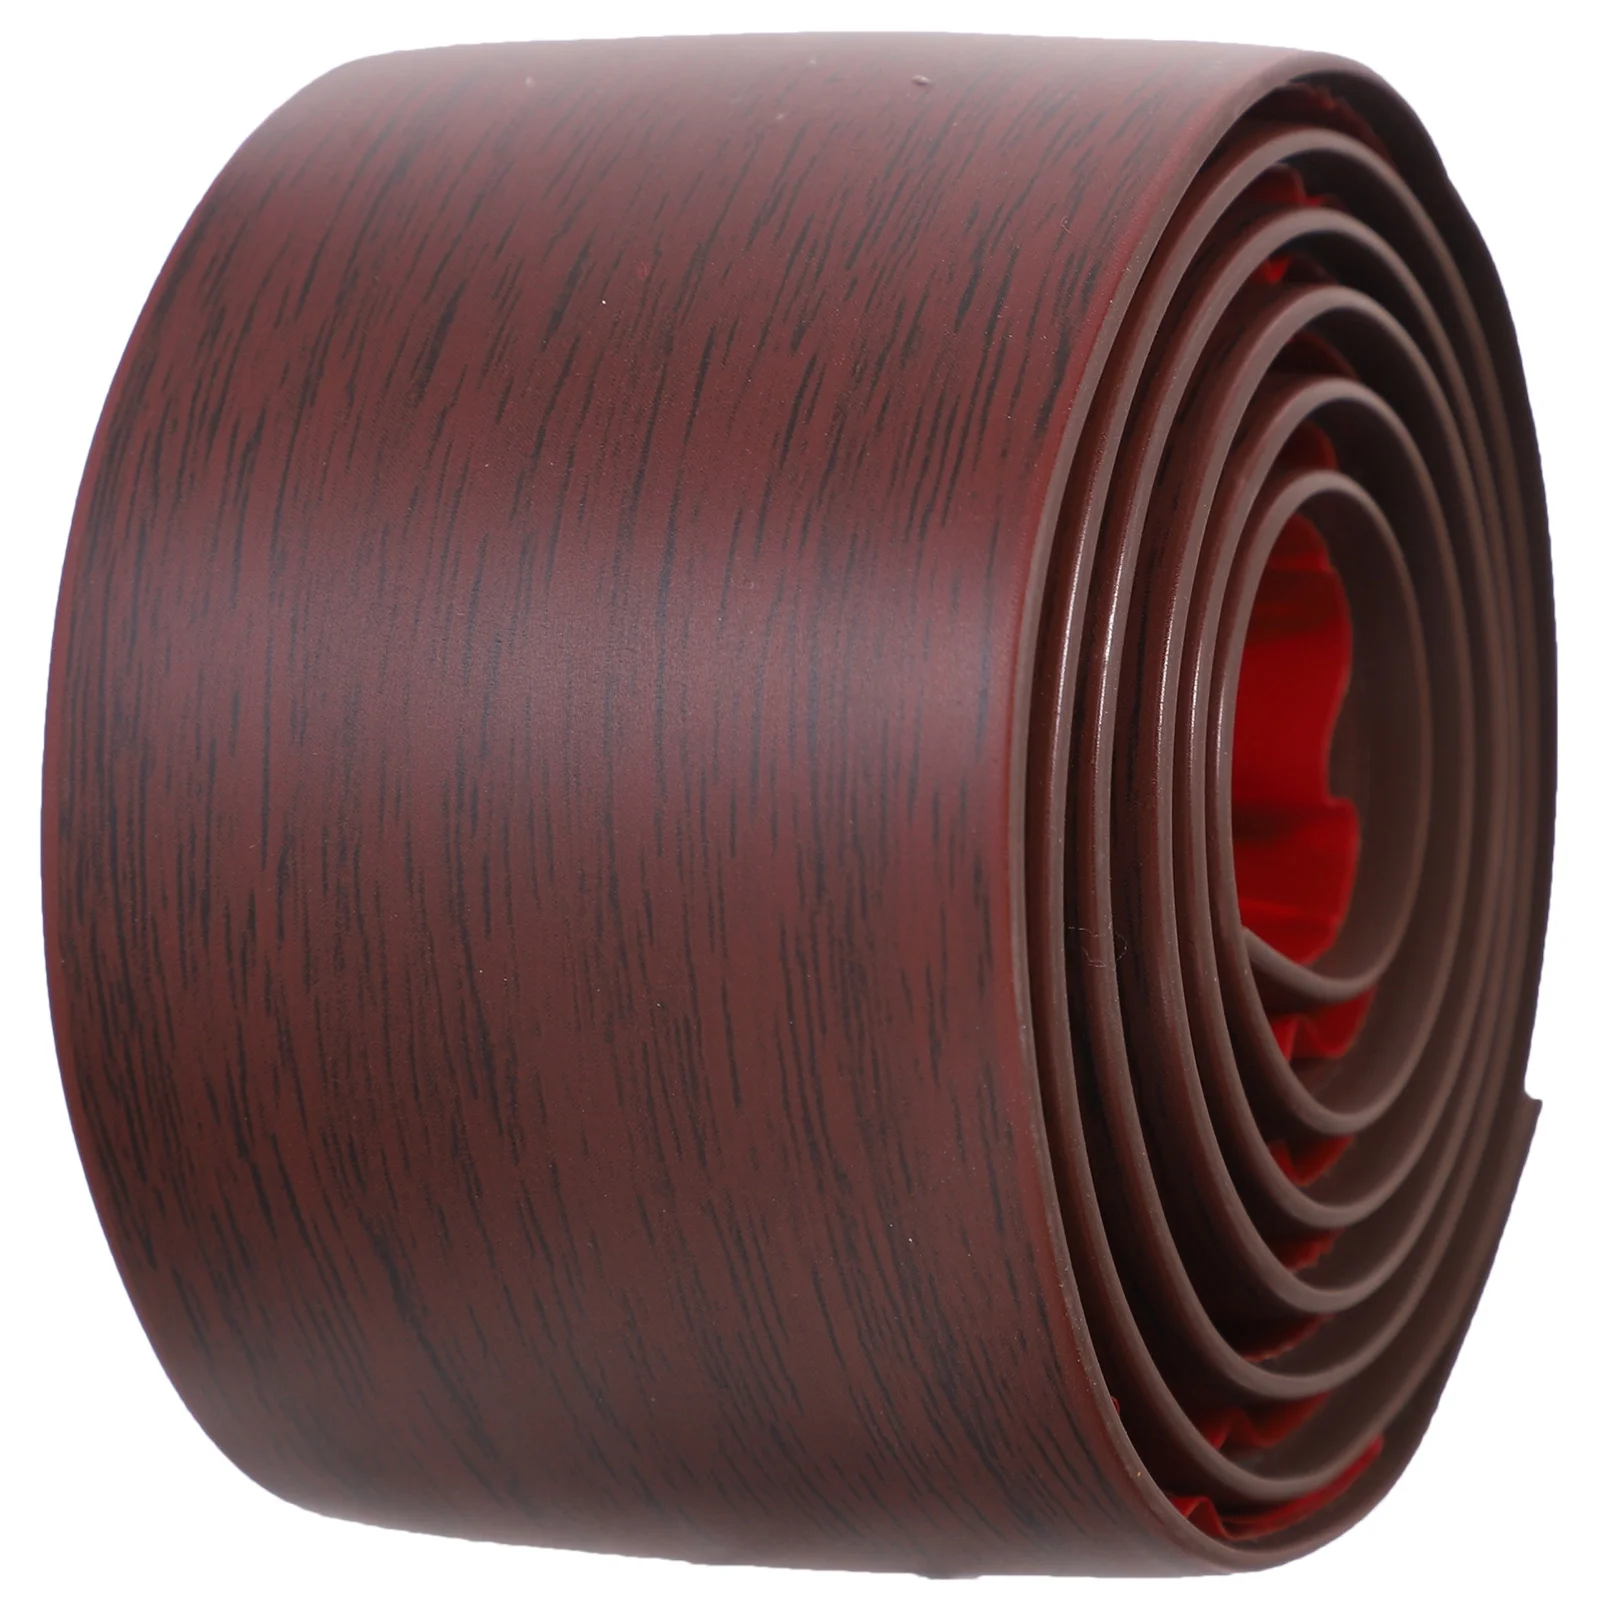 

Floor Transition Strip Wood Flooring Carpet Trim Vinyl Strips Repair Doorways Adhesive Edging Thresholds Cover Laminate Hardwood